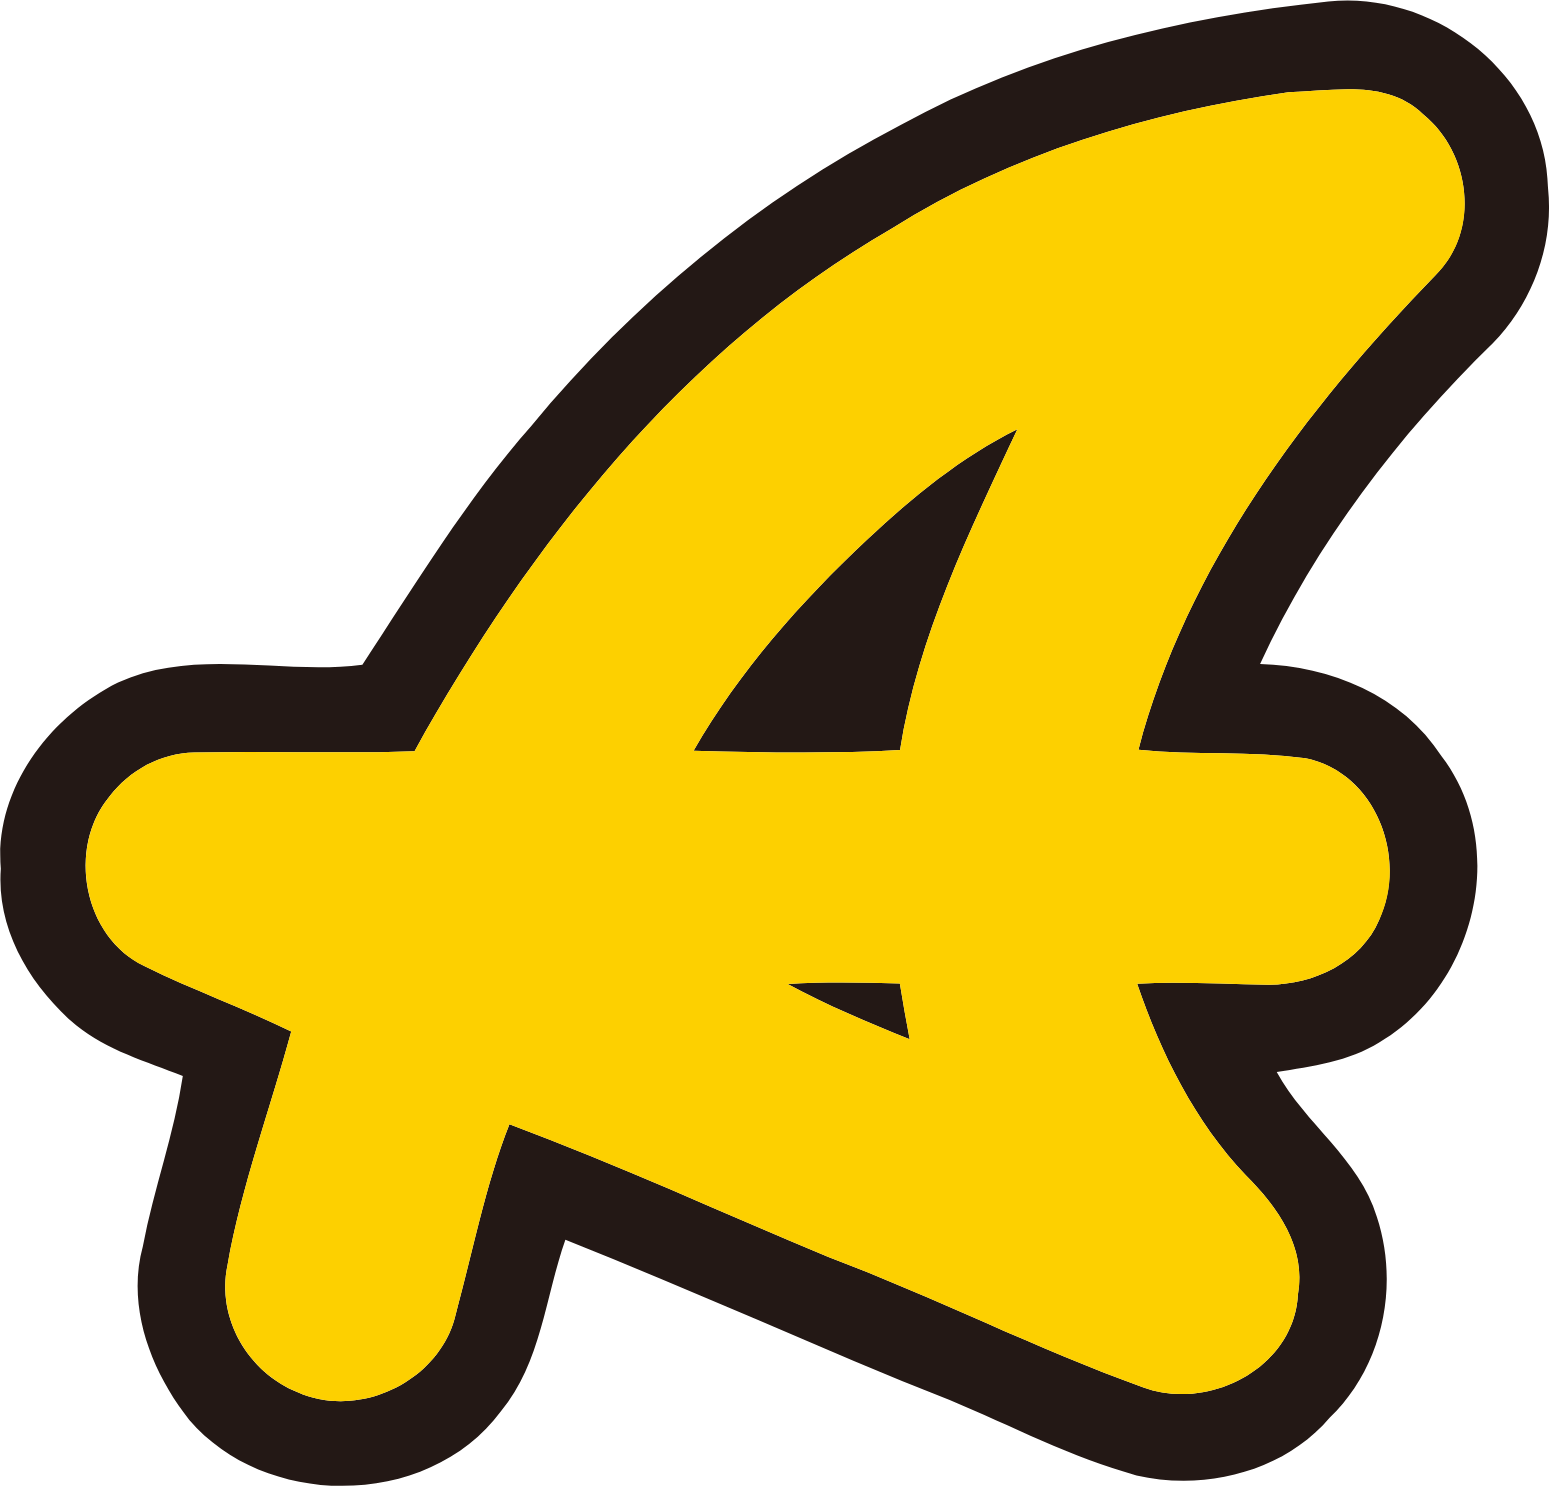 Aiming Inc logo (transparent PNG)